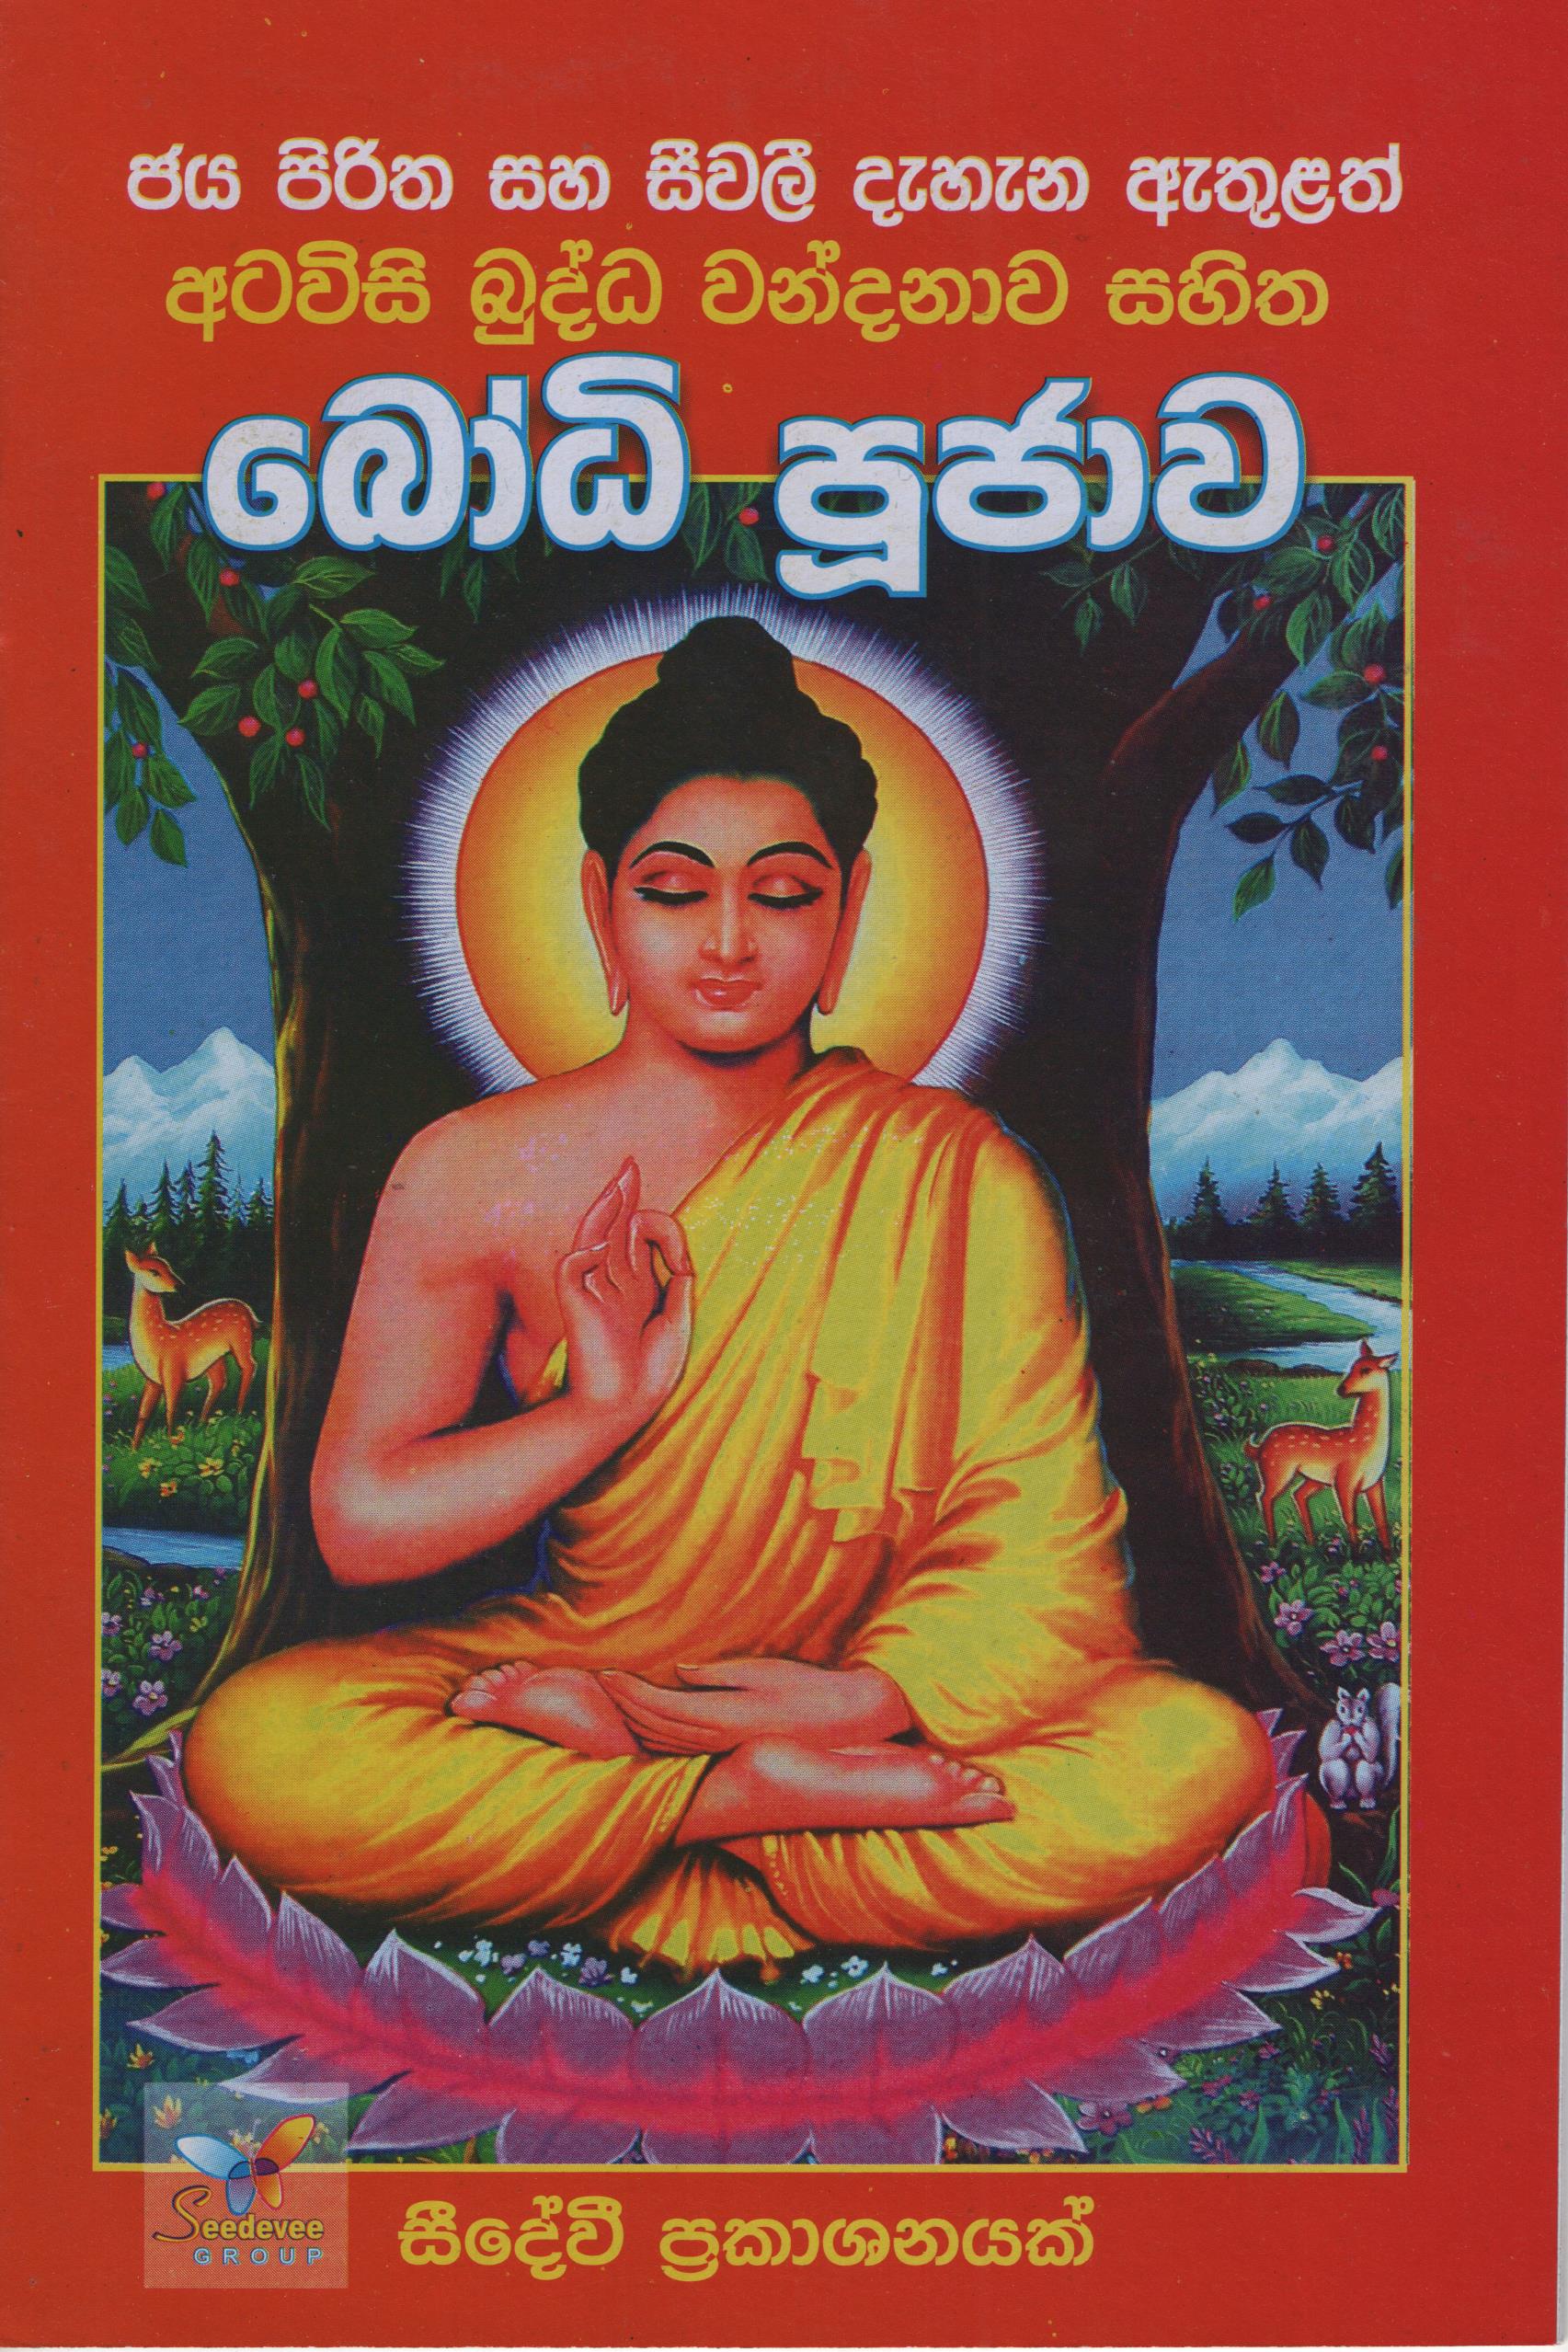 Atavisi Buddha Wandanawa sahitha Bhodi Pujawa